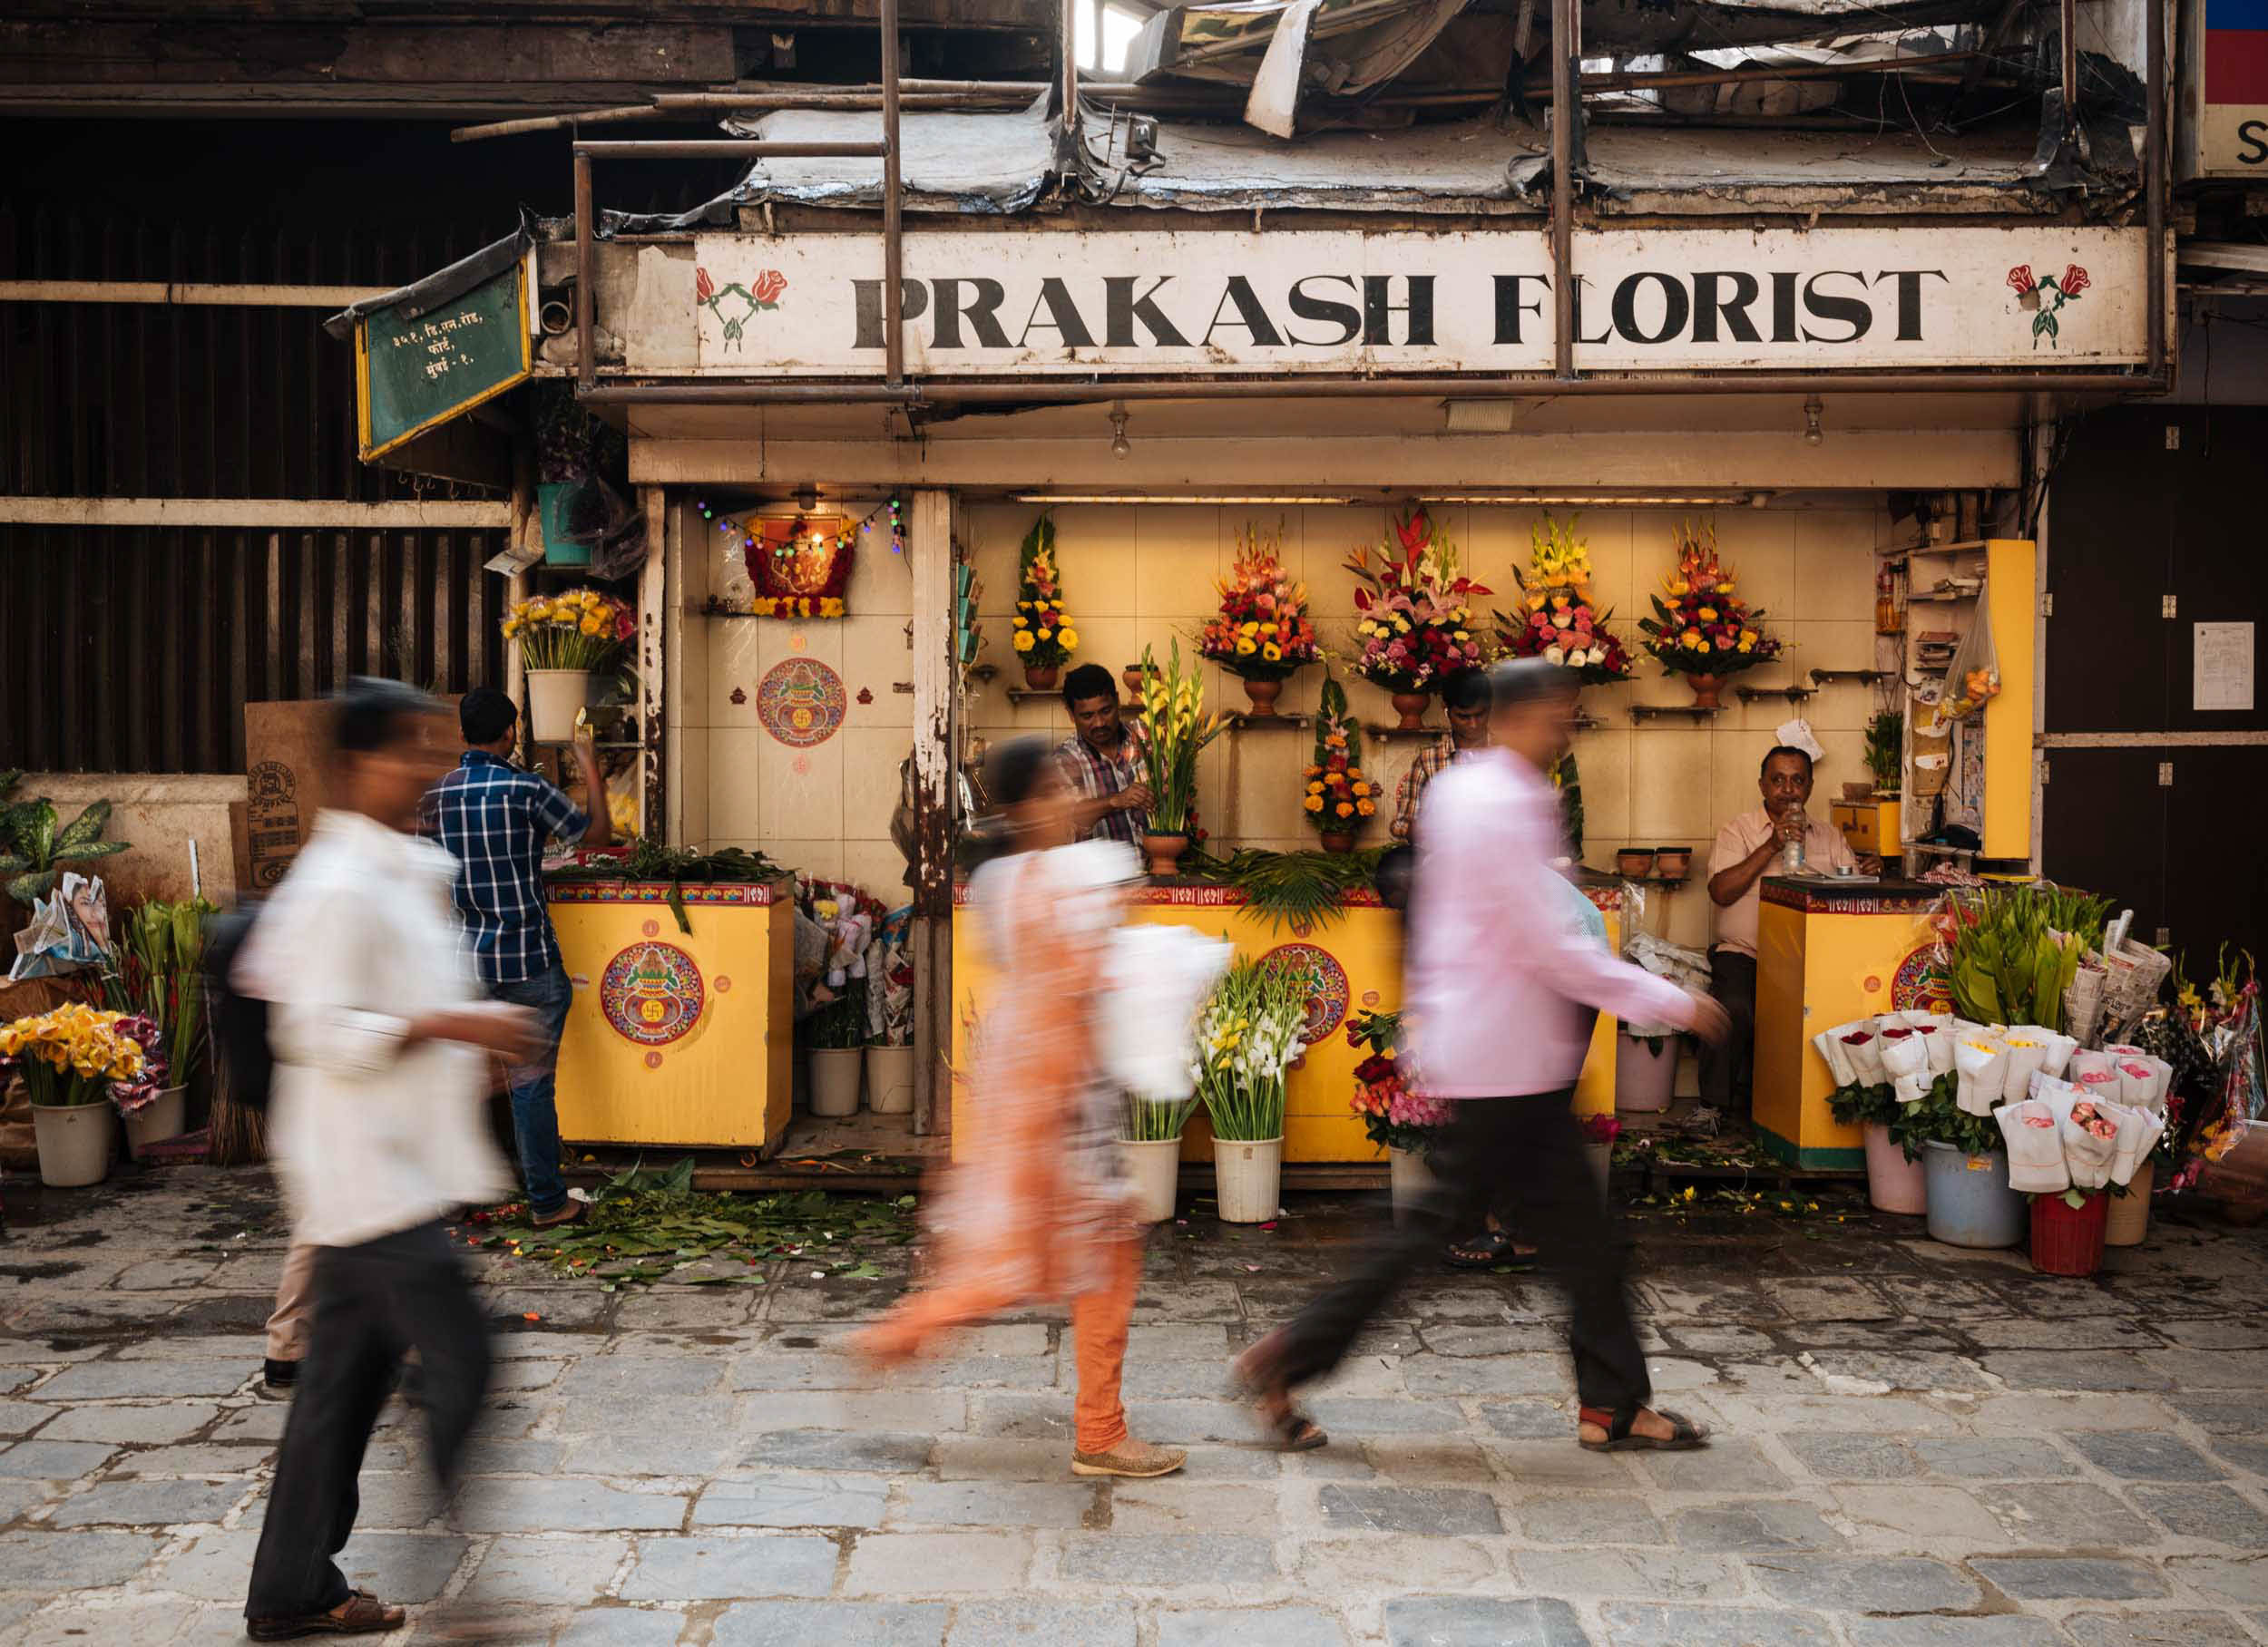 prakash-florist-street-photography-rush-people-mumbai-india